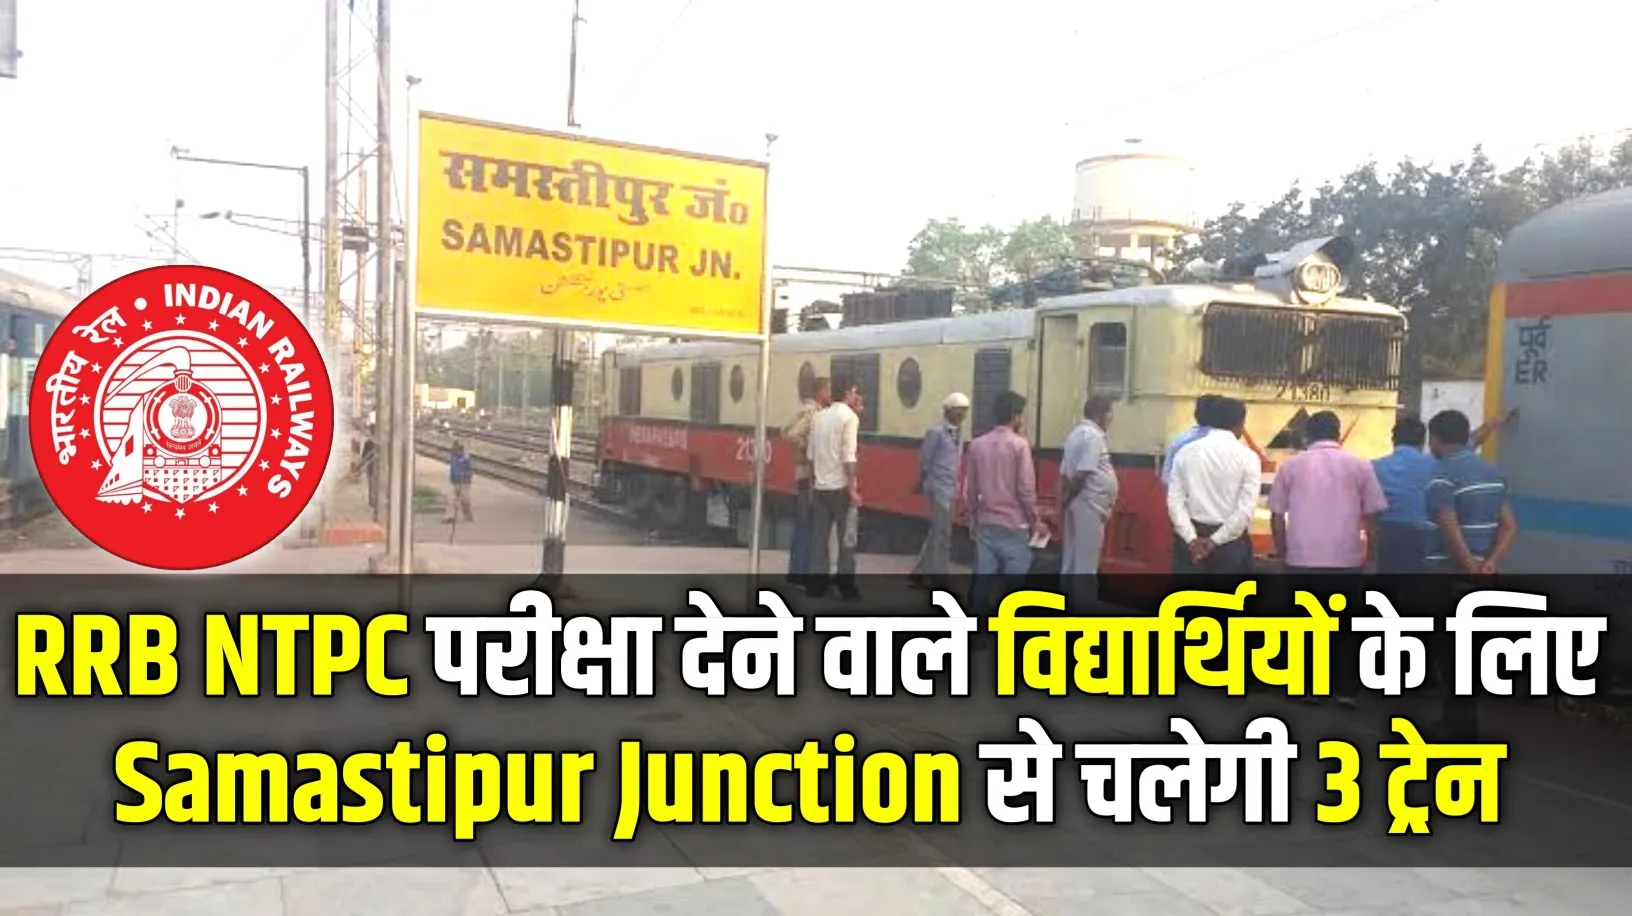 Special train will run from Samastipur